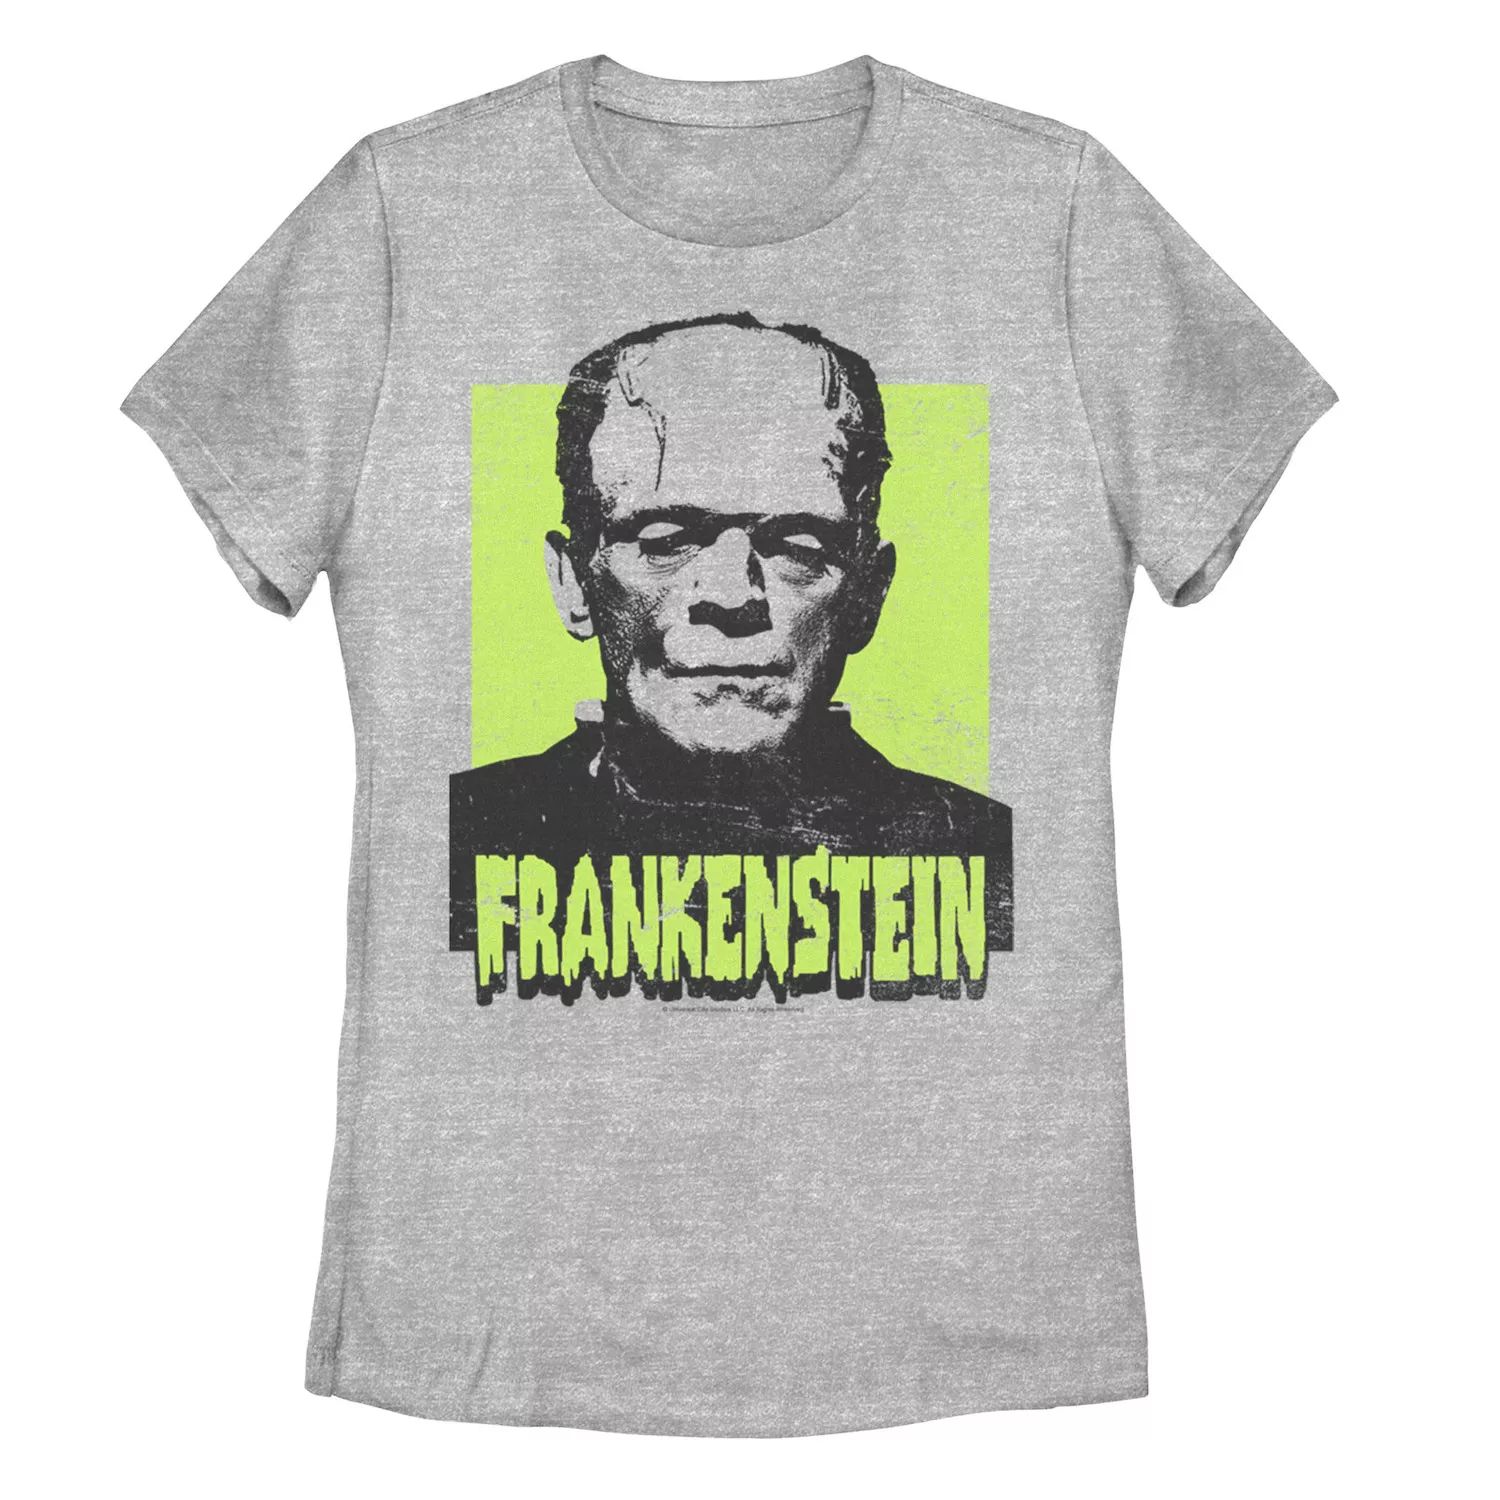 Юниорская футболка Universal Monsters с изображением портрета Франкенштейна Licensed Character фигурка bendyfig universal monsters невеста франкенштейна 19 см